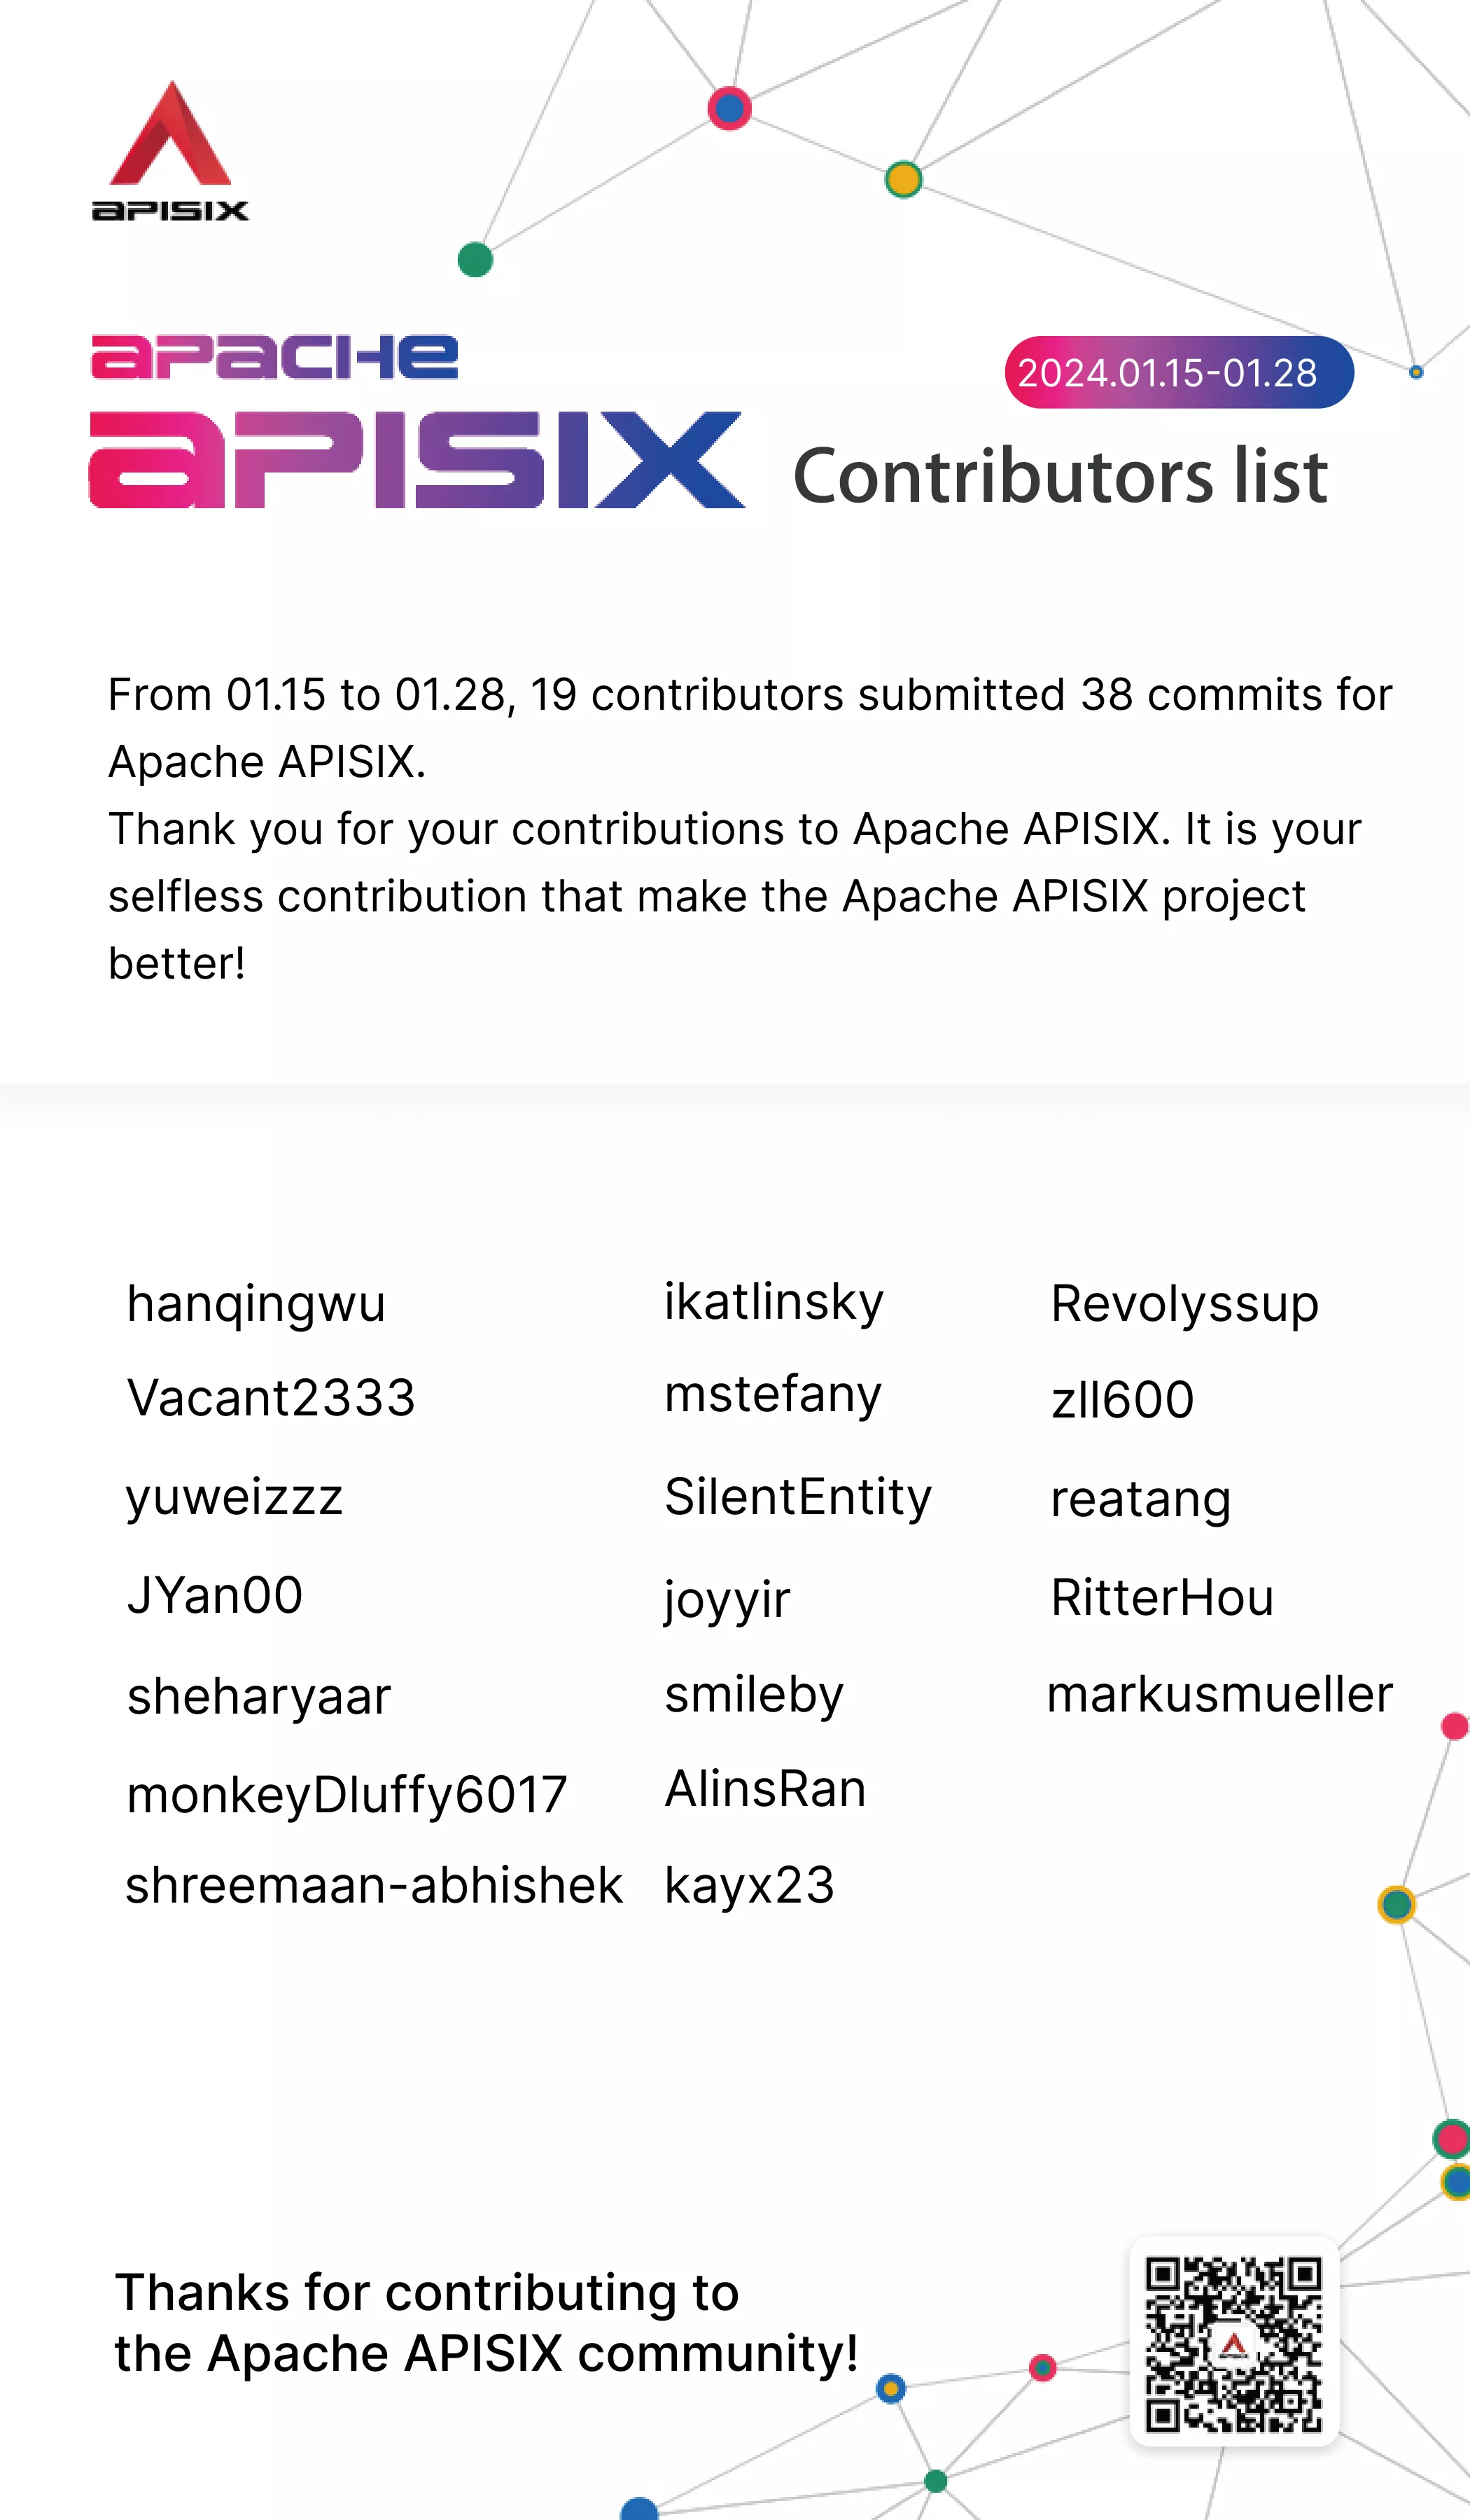 Apache APISIX Contributors List